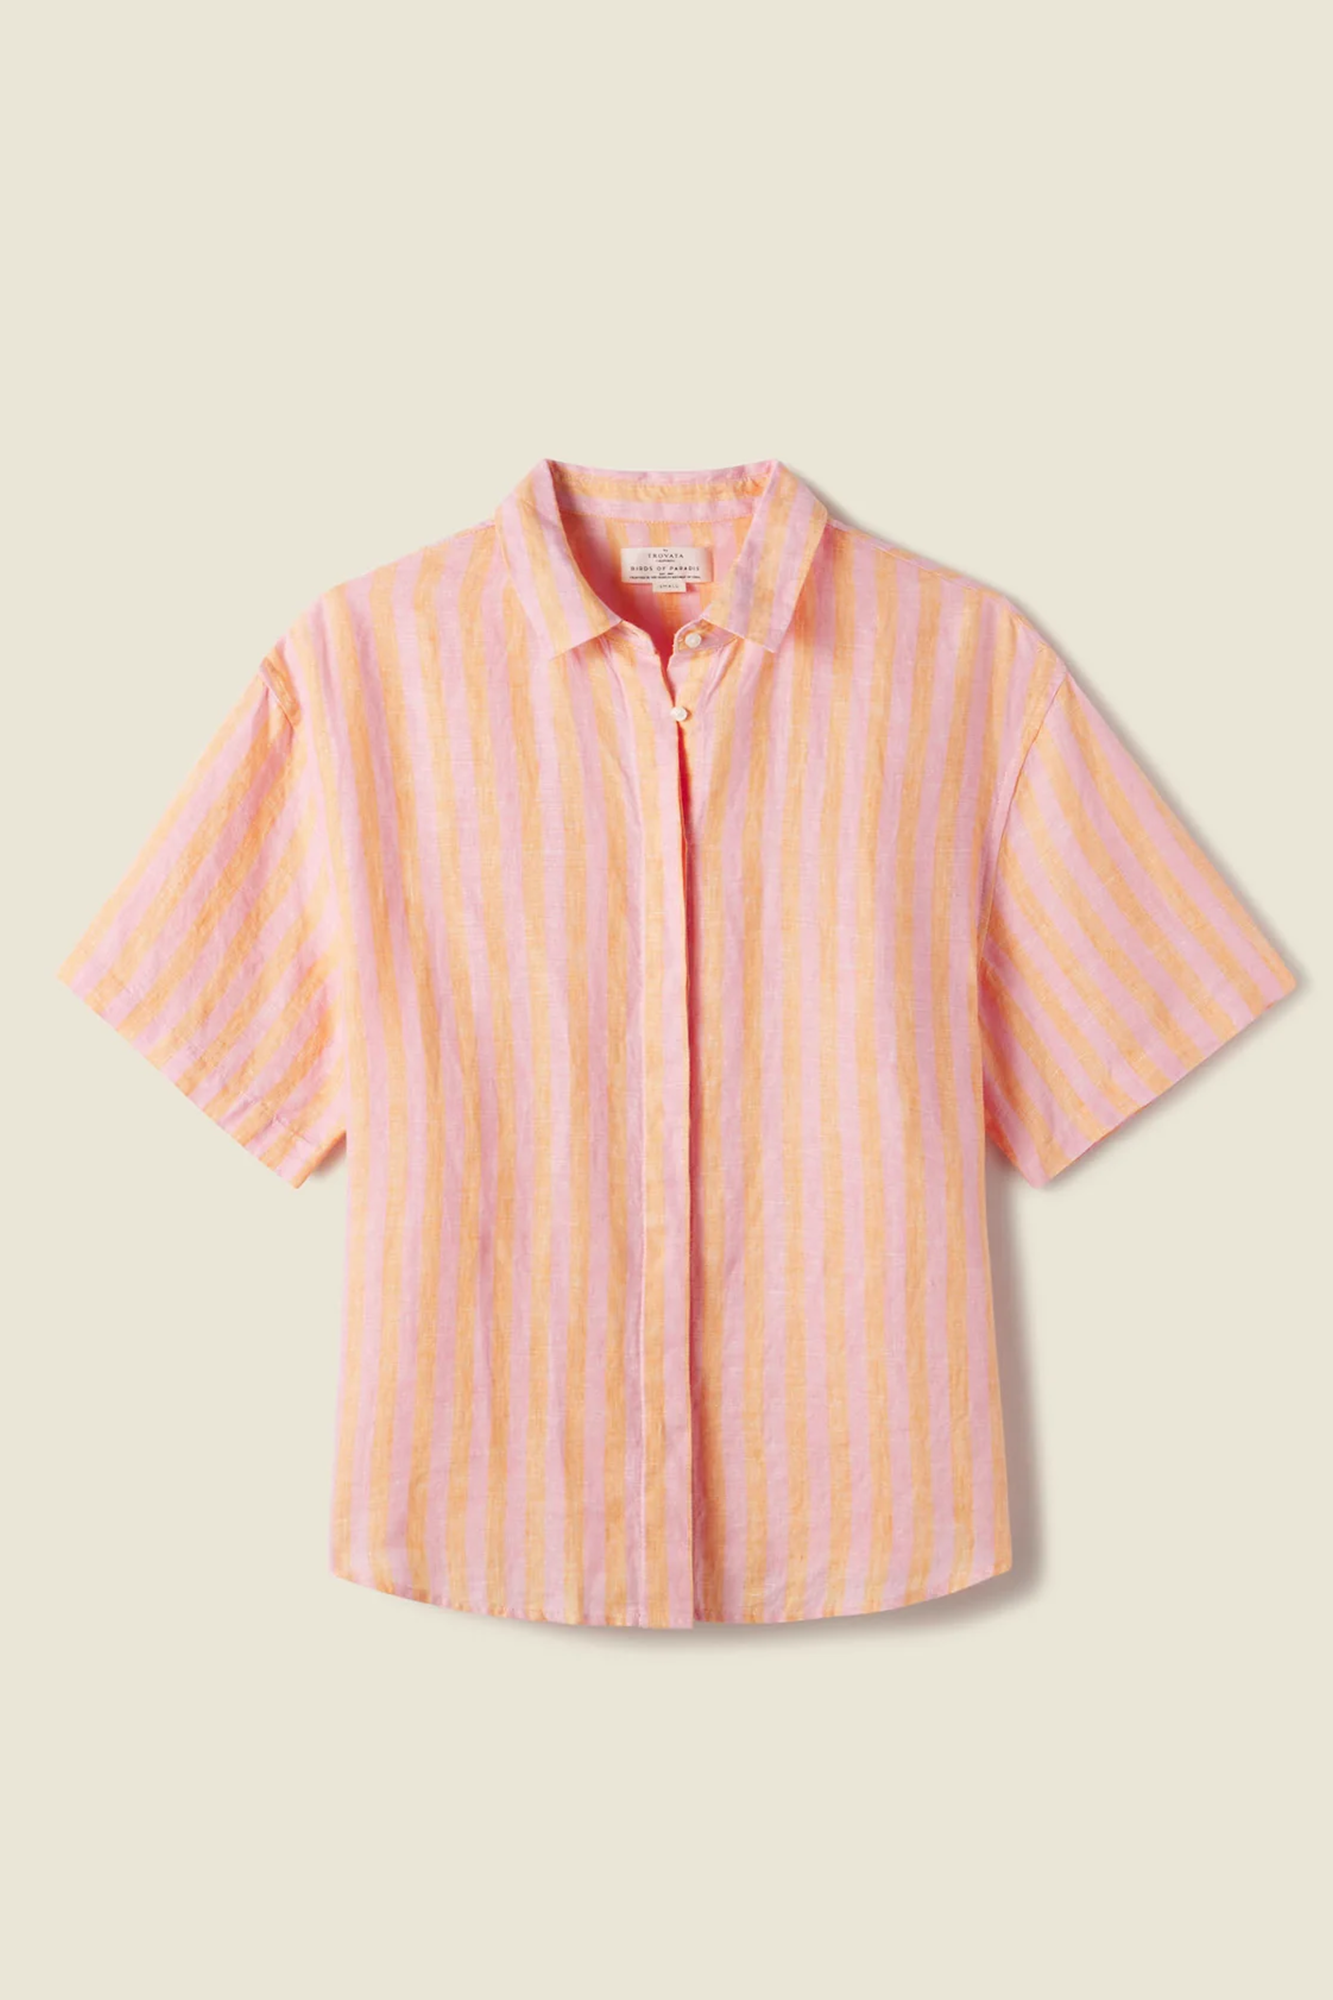 Sienna Shirt Creamsicle Stripe